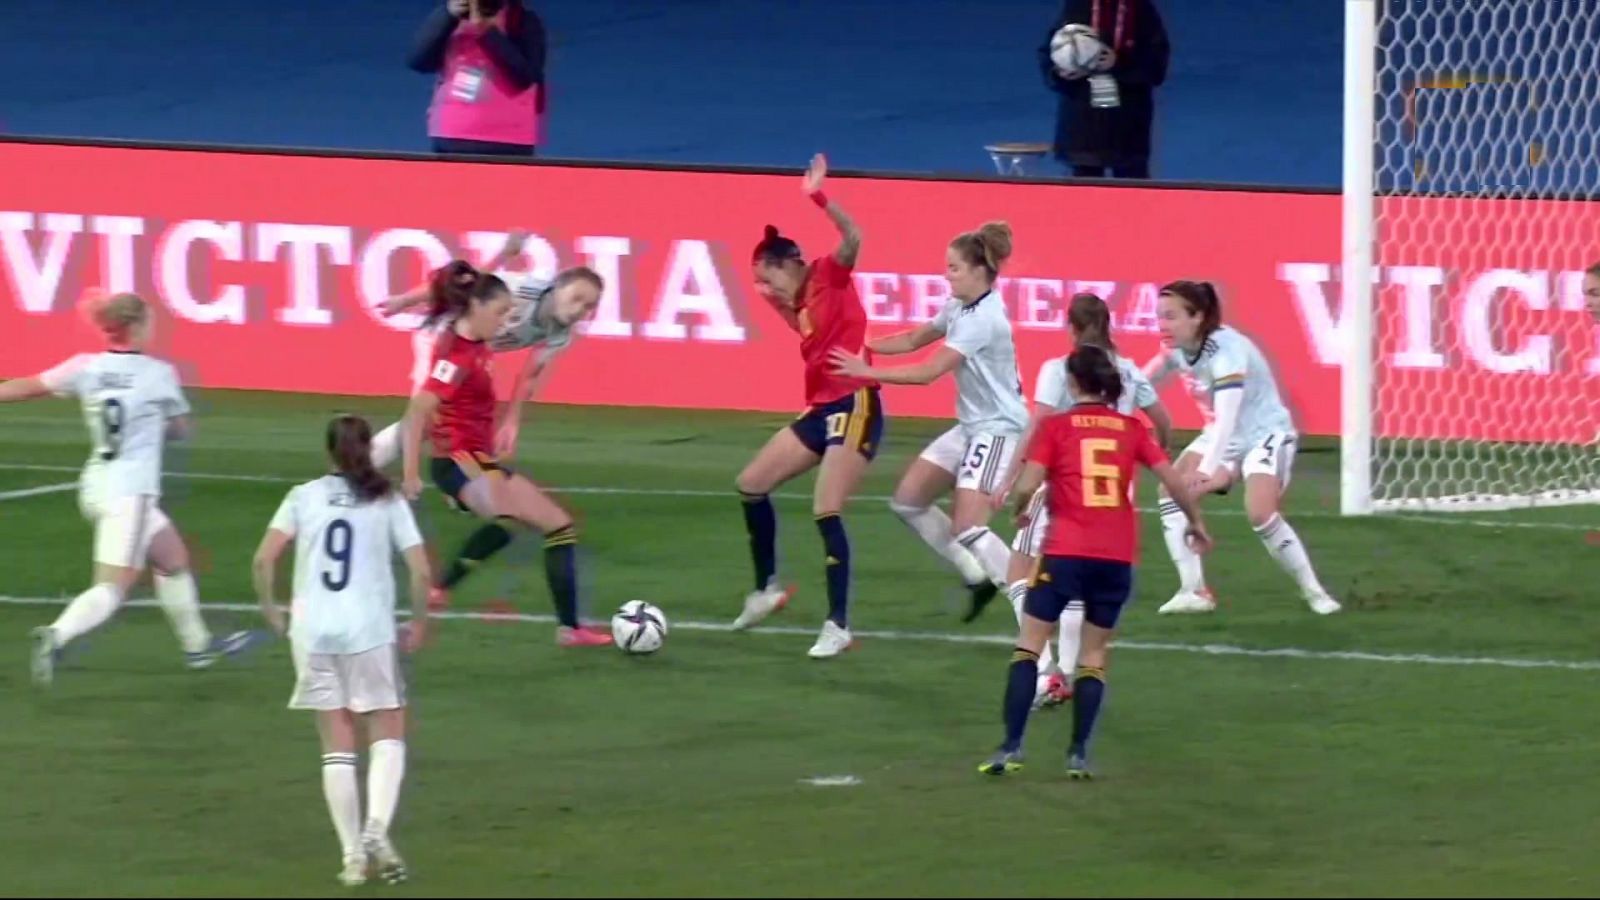 Fútbol - Clasificación Campeonato del Mundo femenino 2023: España - Escocia